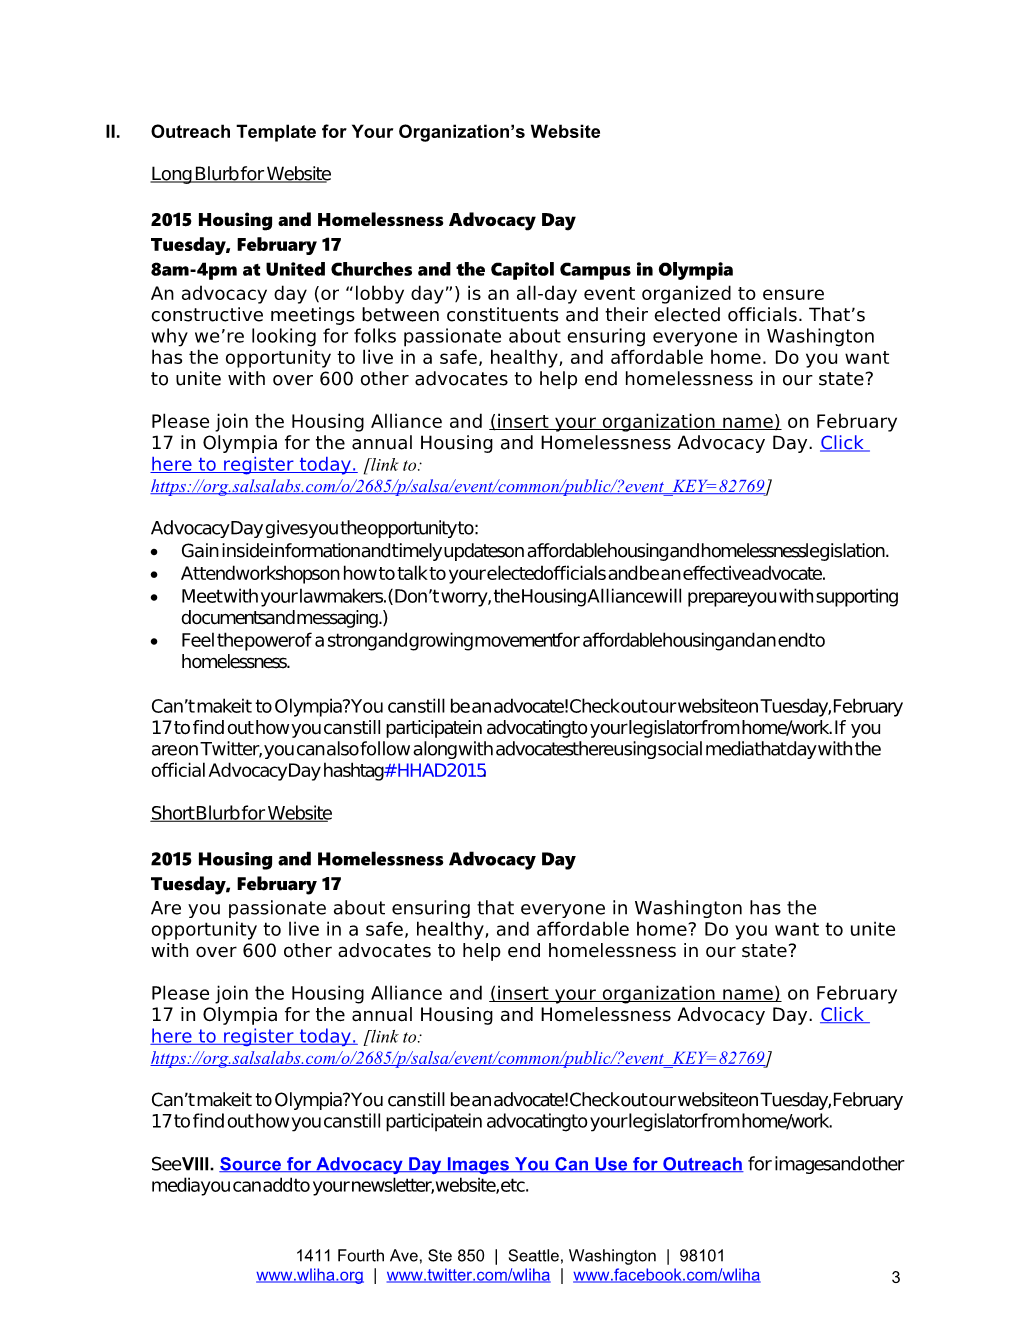 Advocacy Day 2014 FAQ Sheet